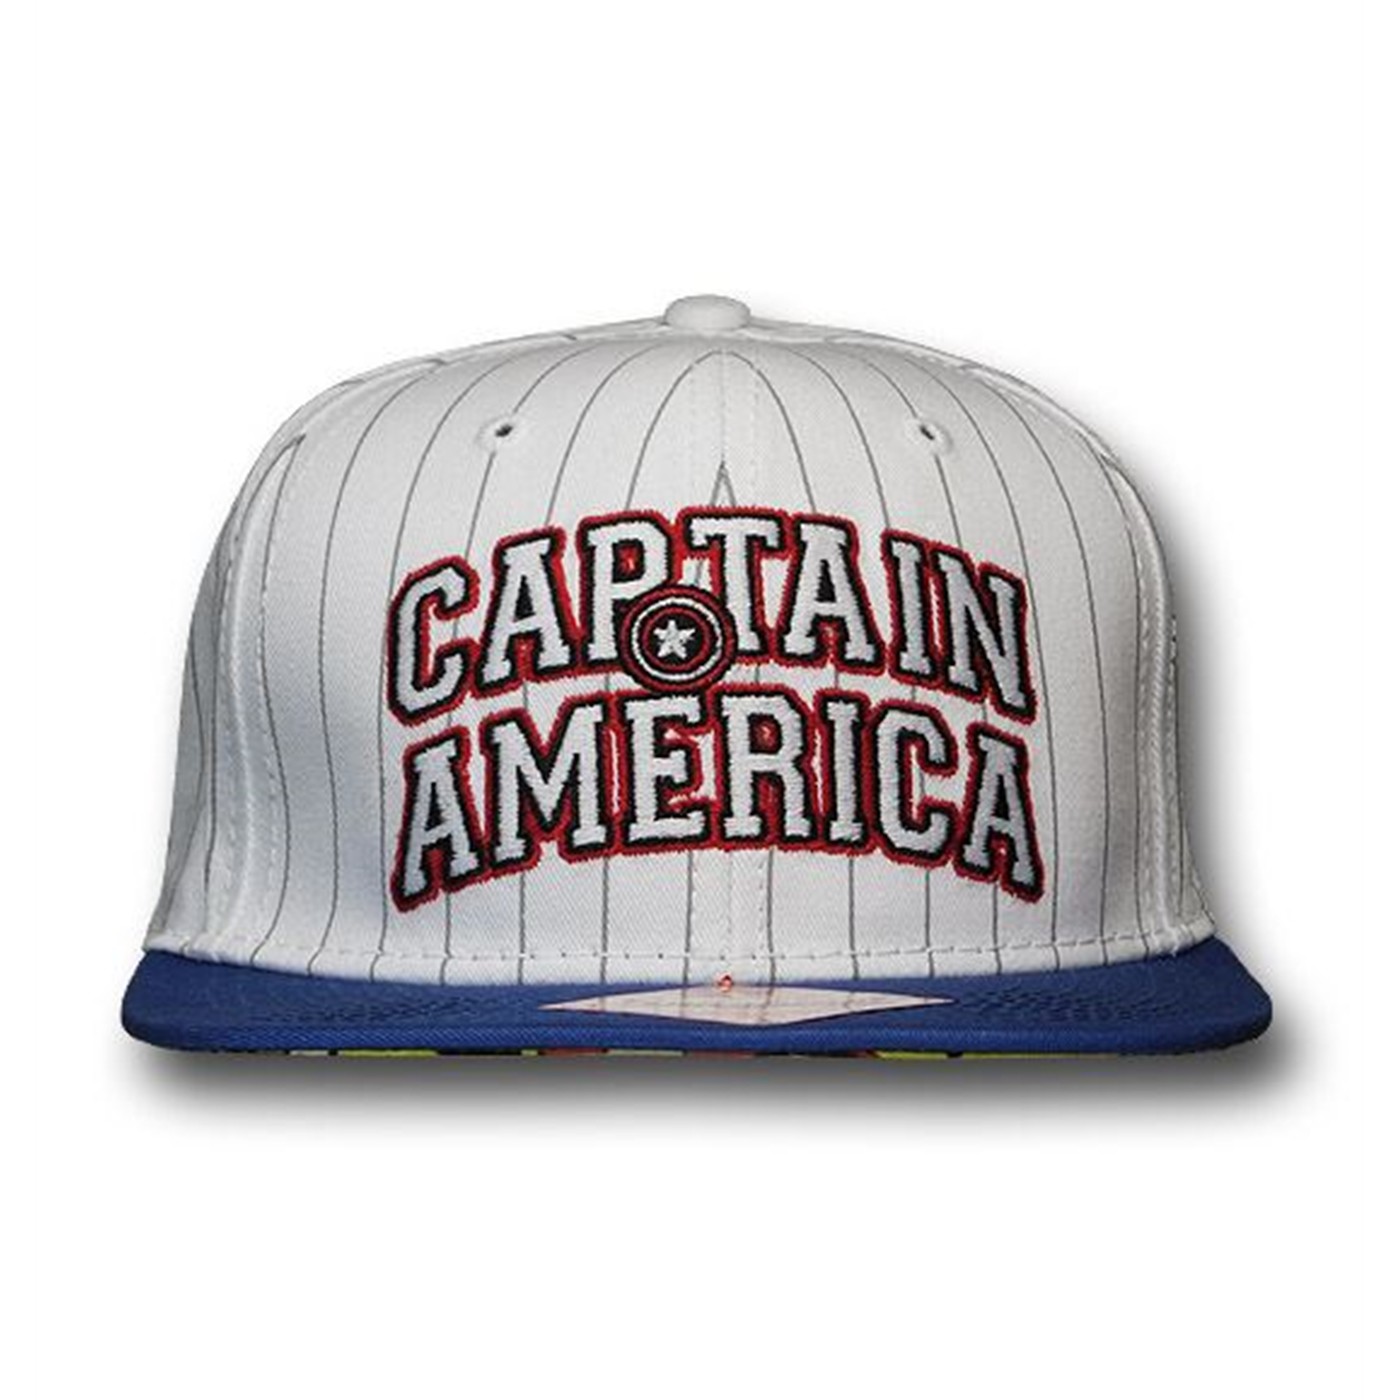 Captain America White Snapback Flat Bill Cap